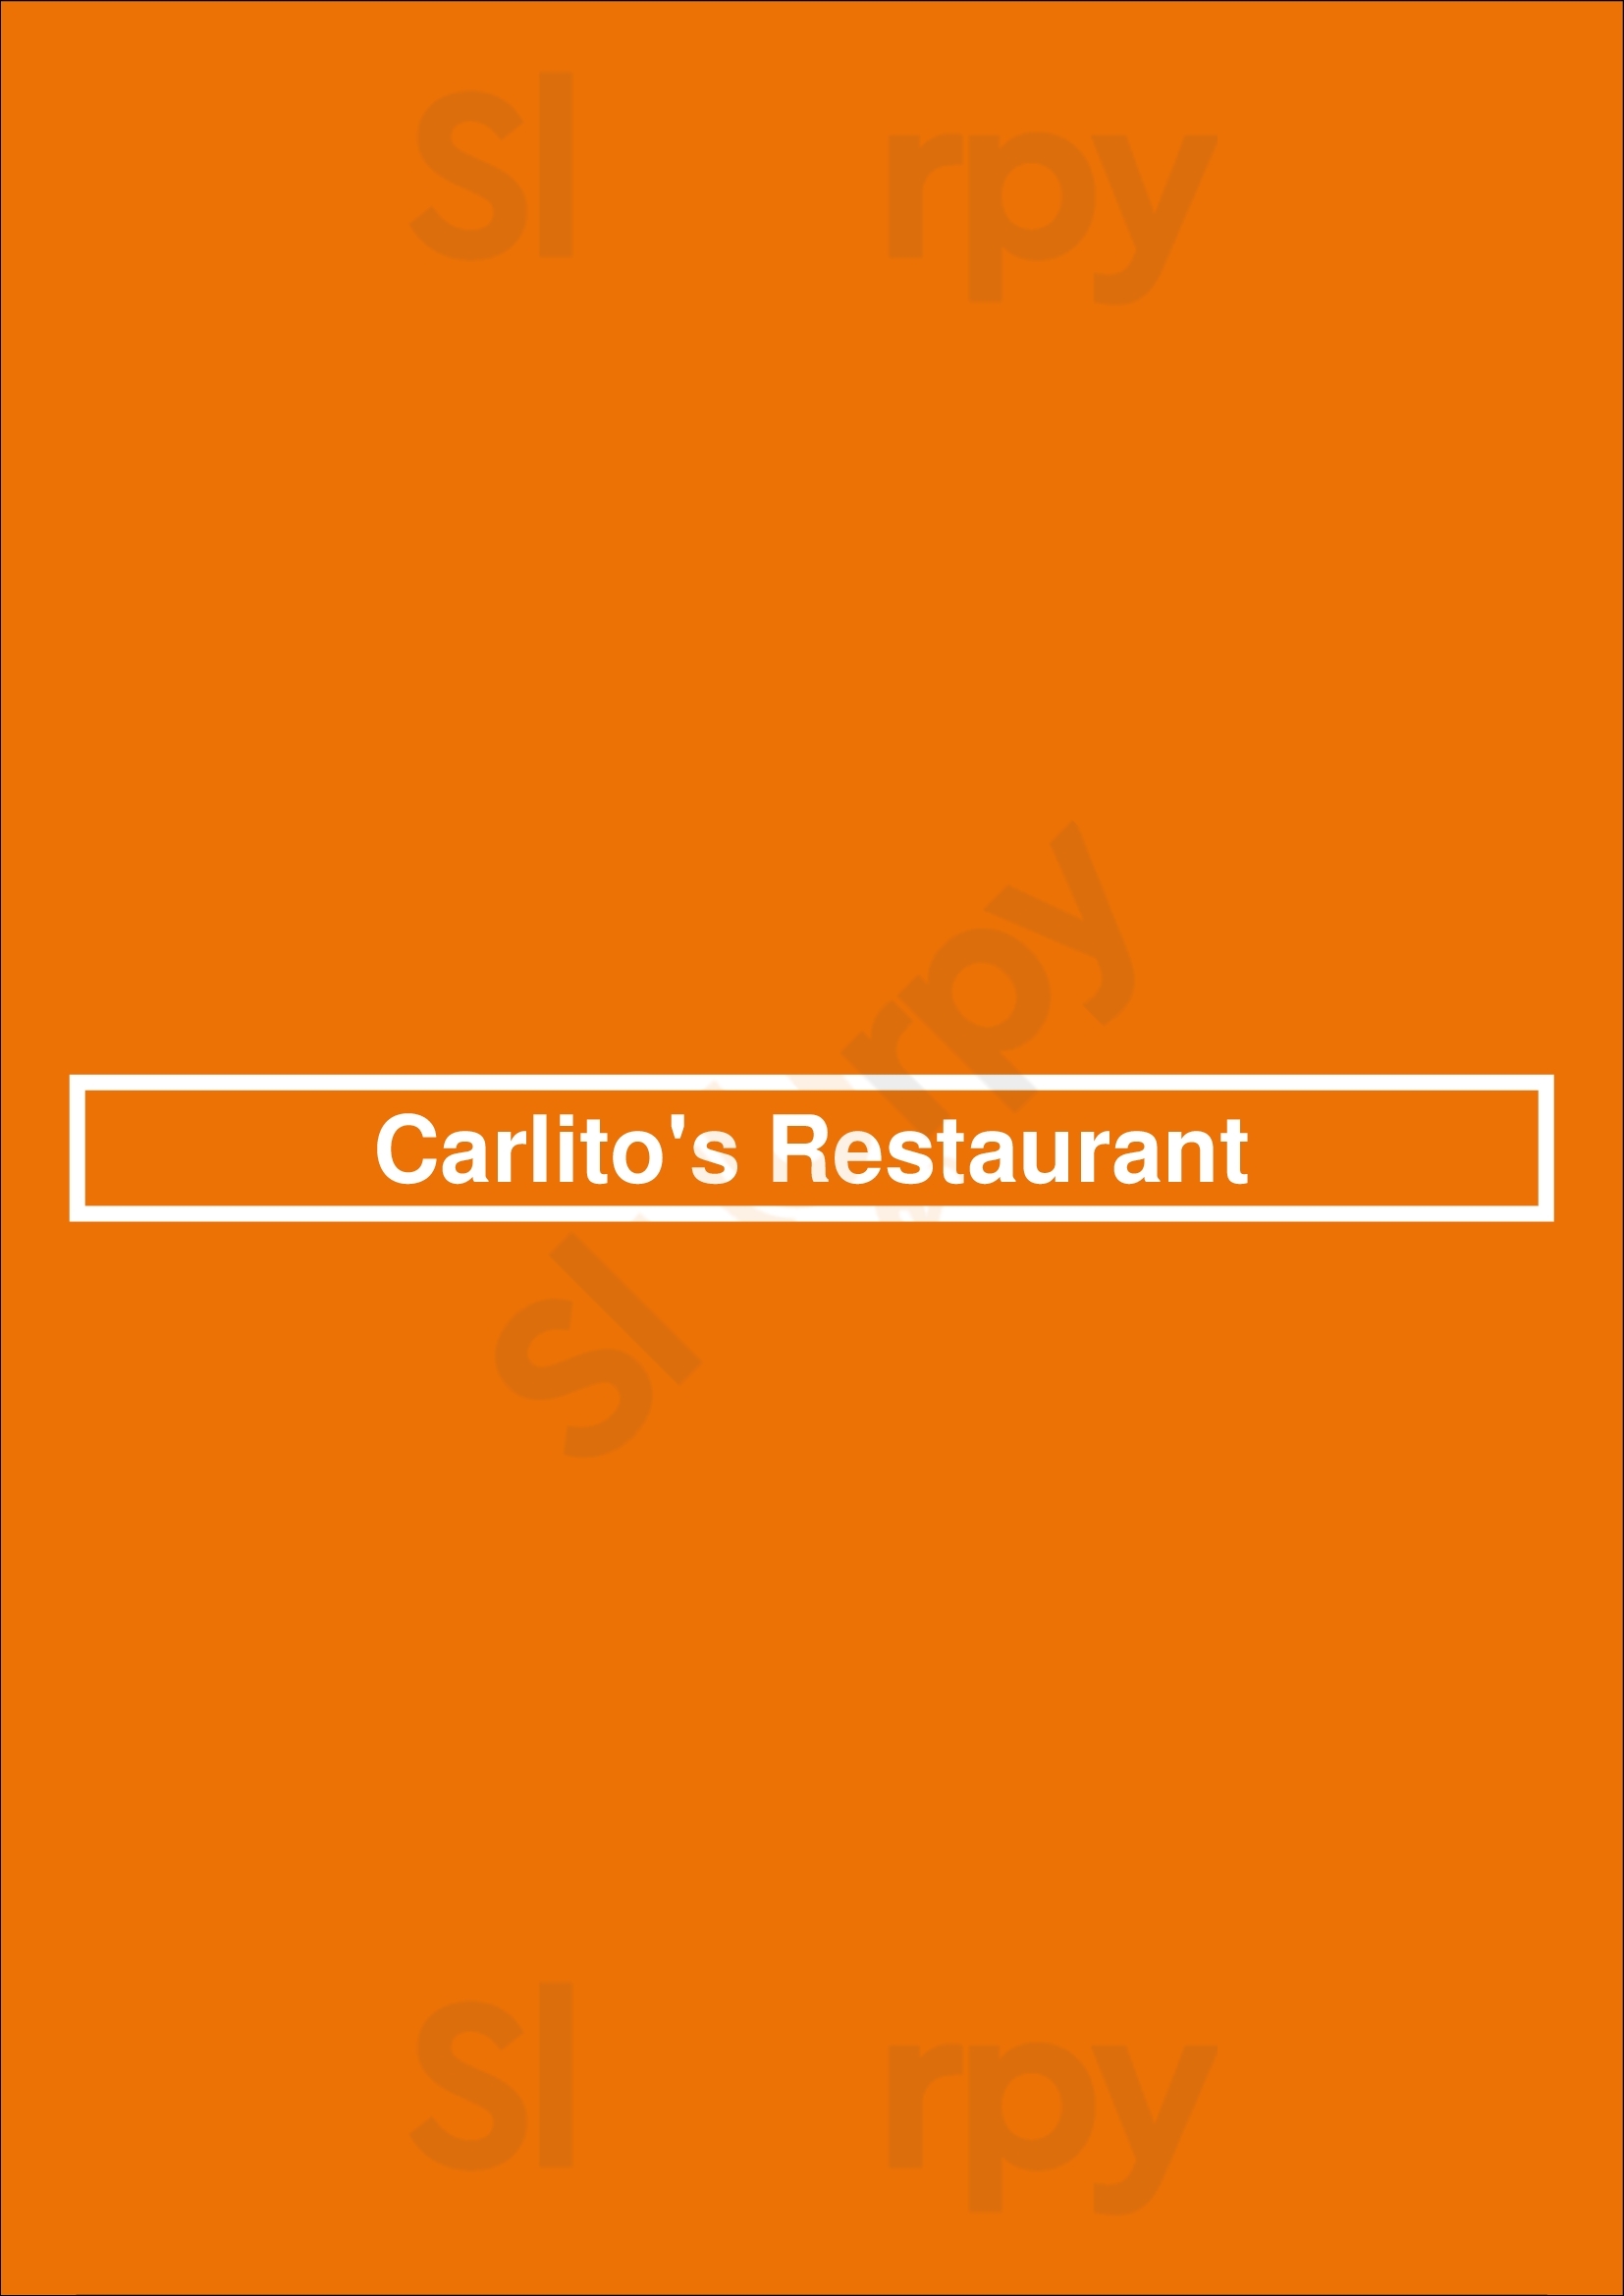 Carlito's Restaurant Bruges Menu - 1